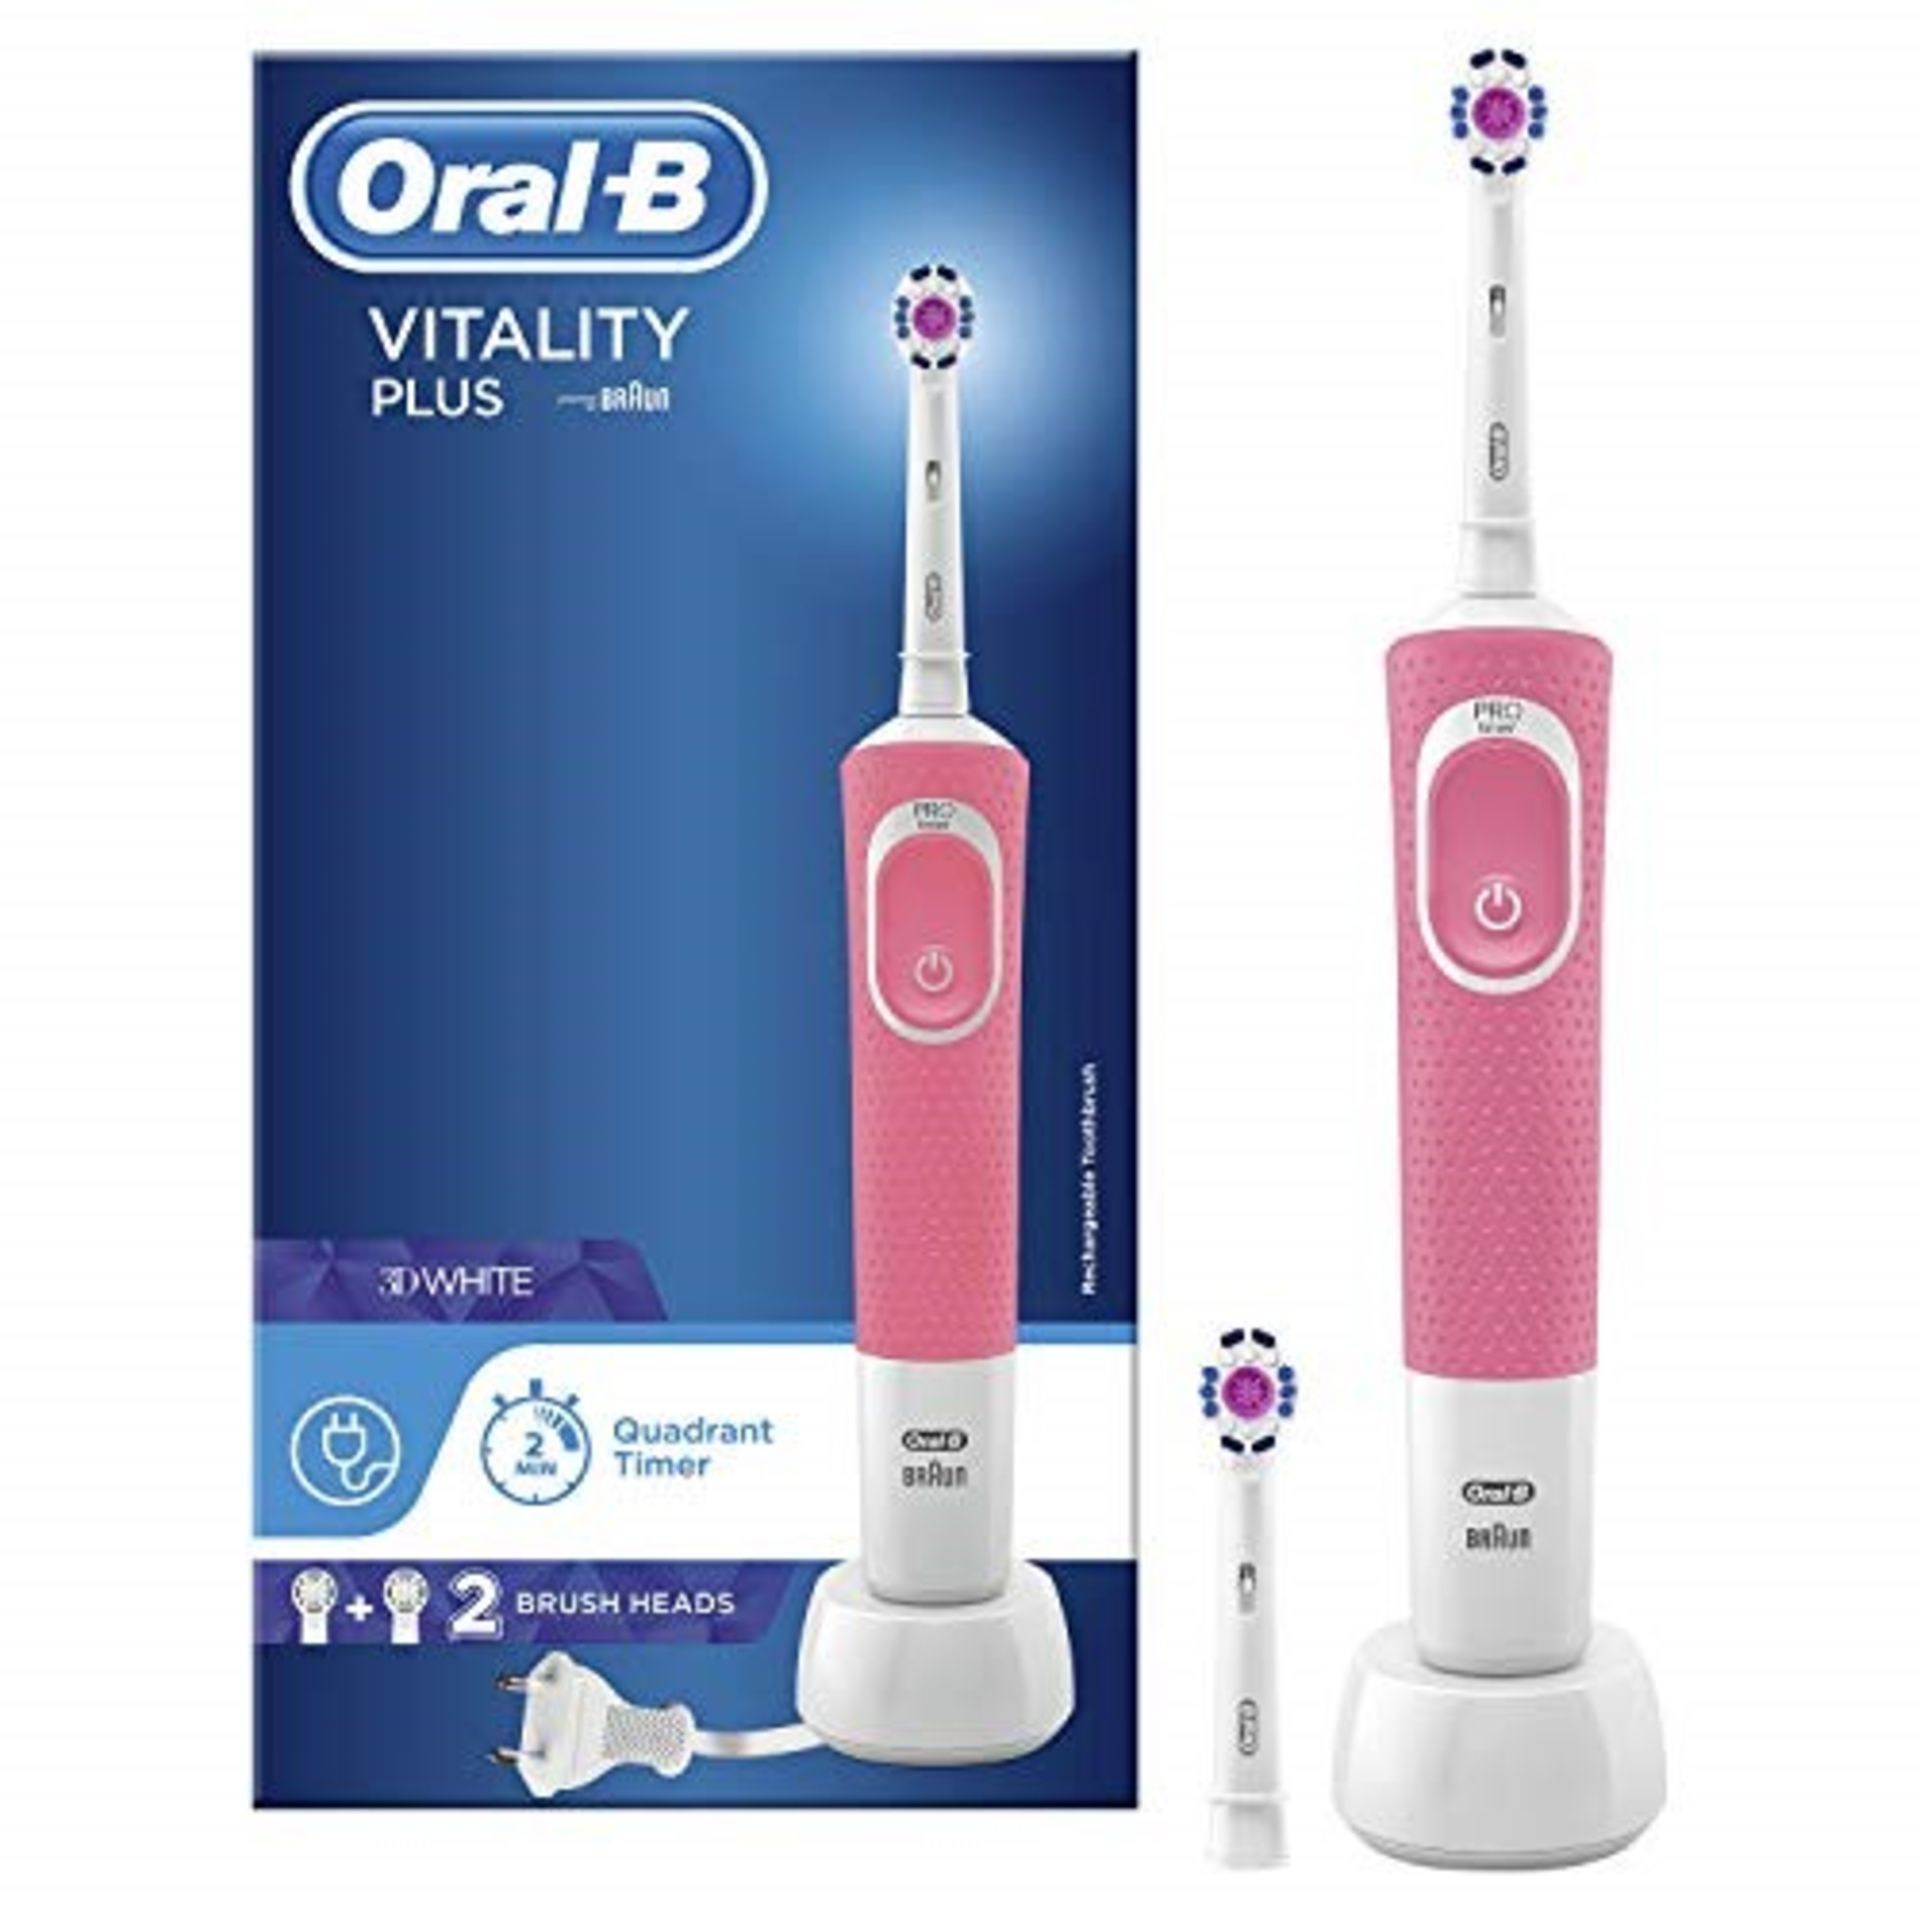 Oral-B Vitality Plus 3D White Electric Rechargea